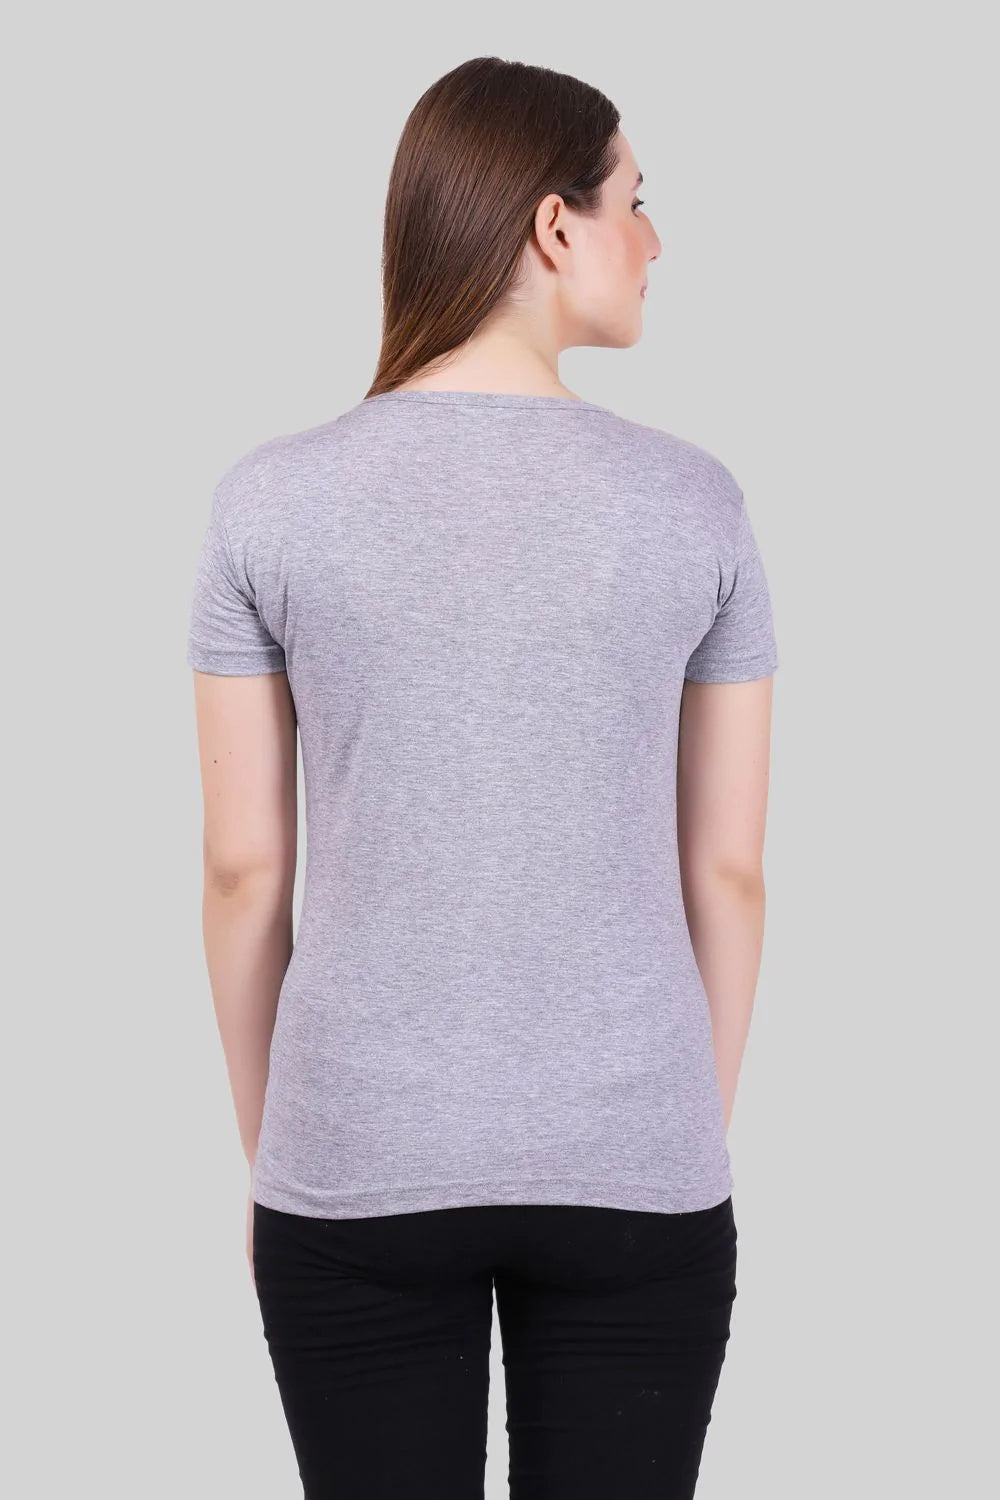 Fleximaa Women's Cotton Plain V Neck Half Sleeve T-Shirt (Pack of 4) - Fleximaa